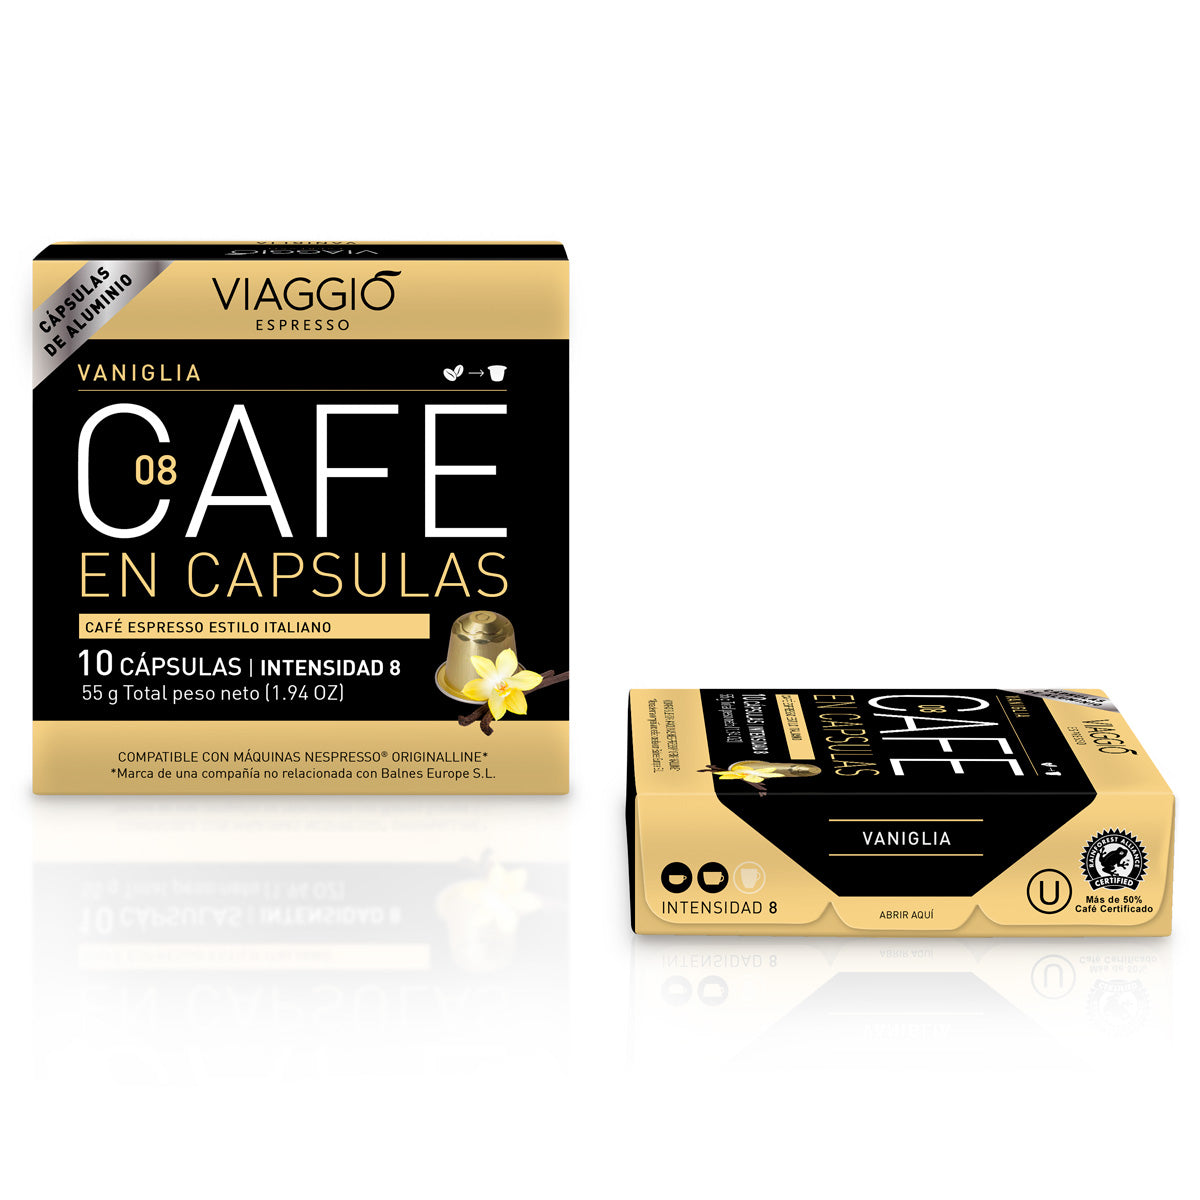 Combo PARA DESPERTAR cápsulas compatibles con Nespresso